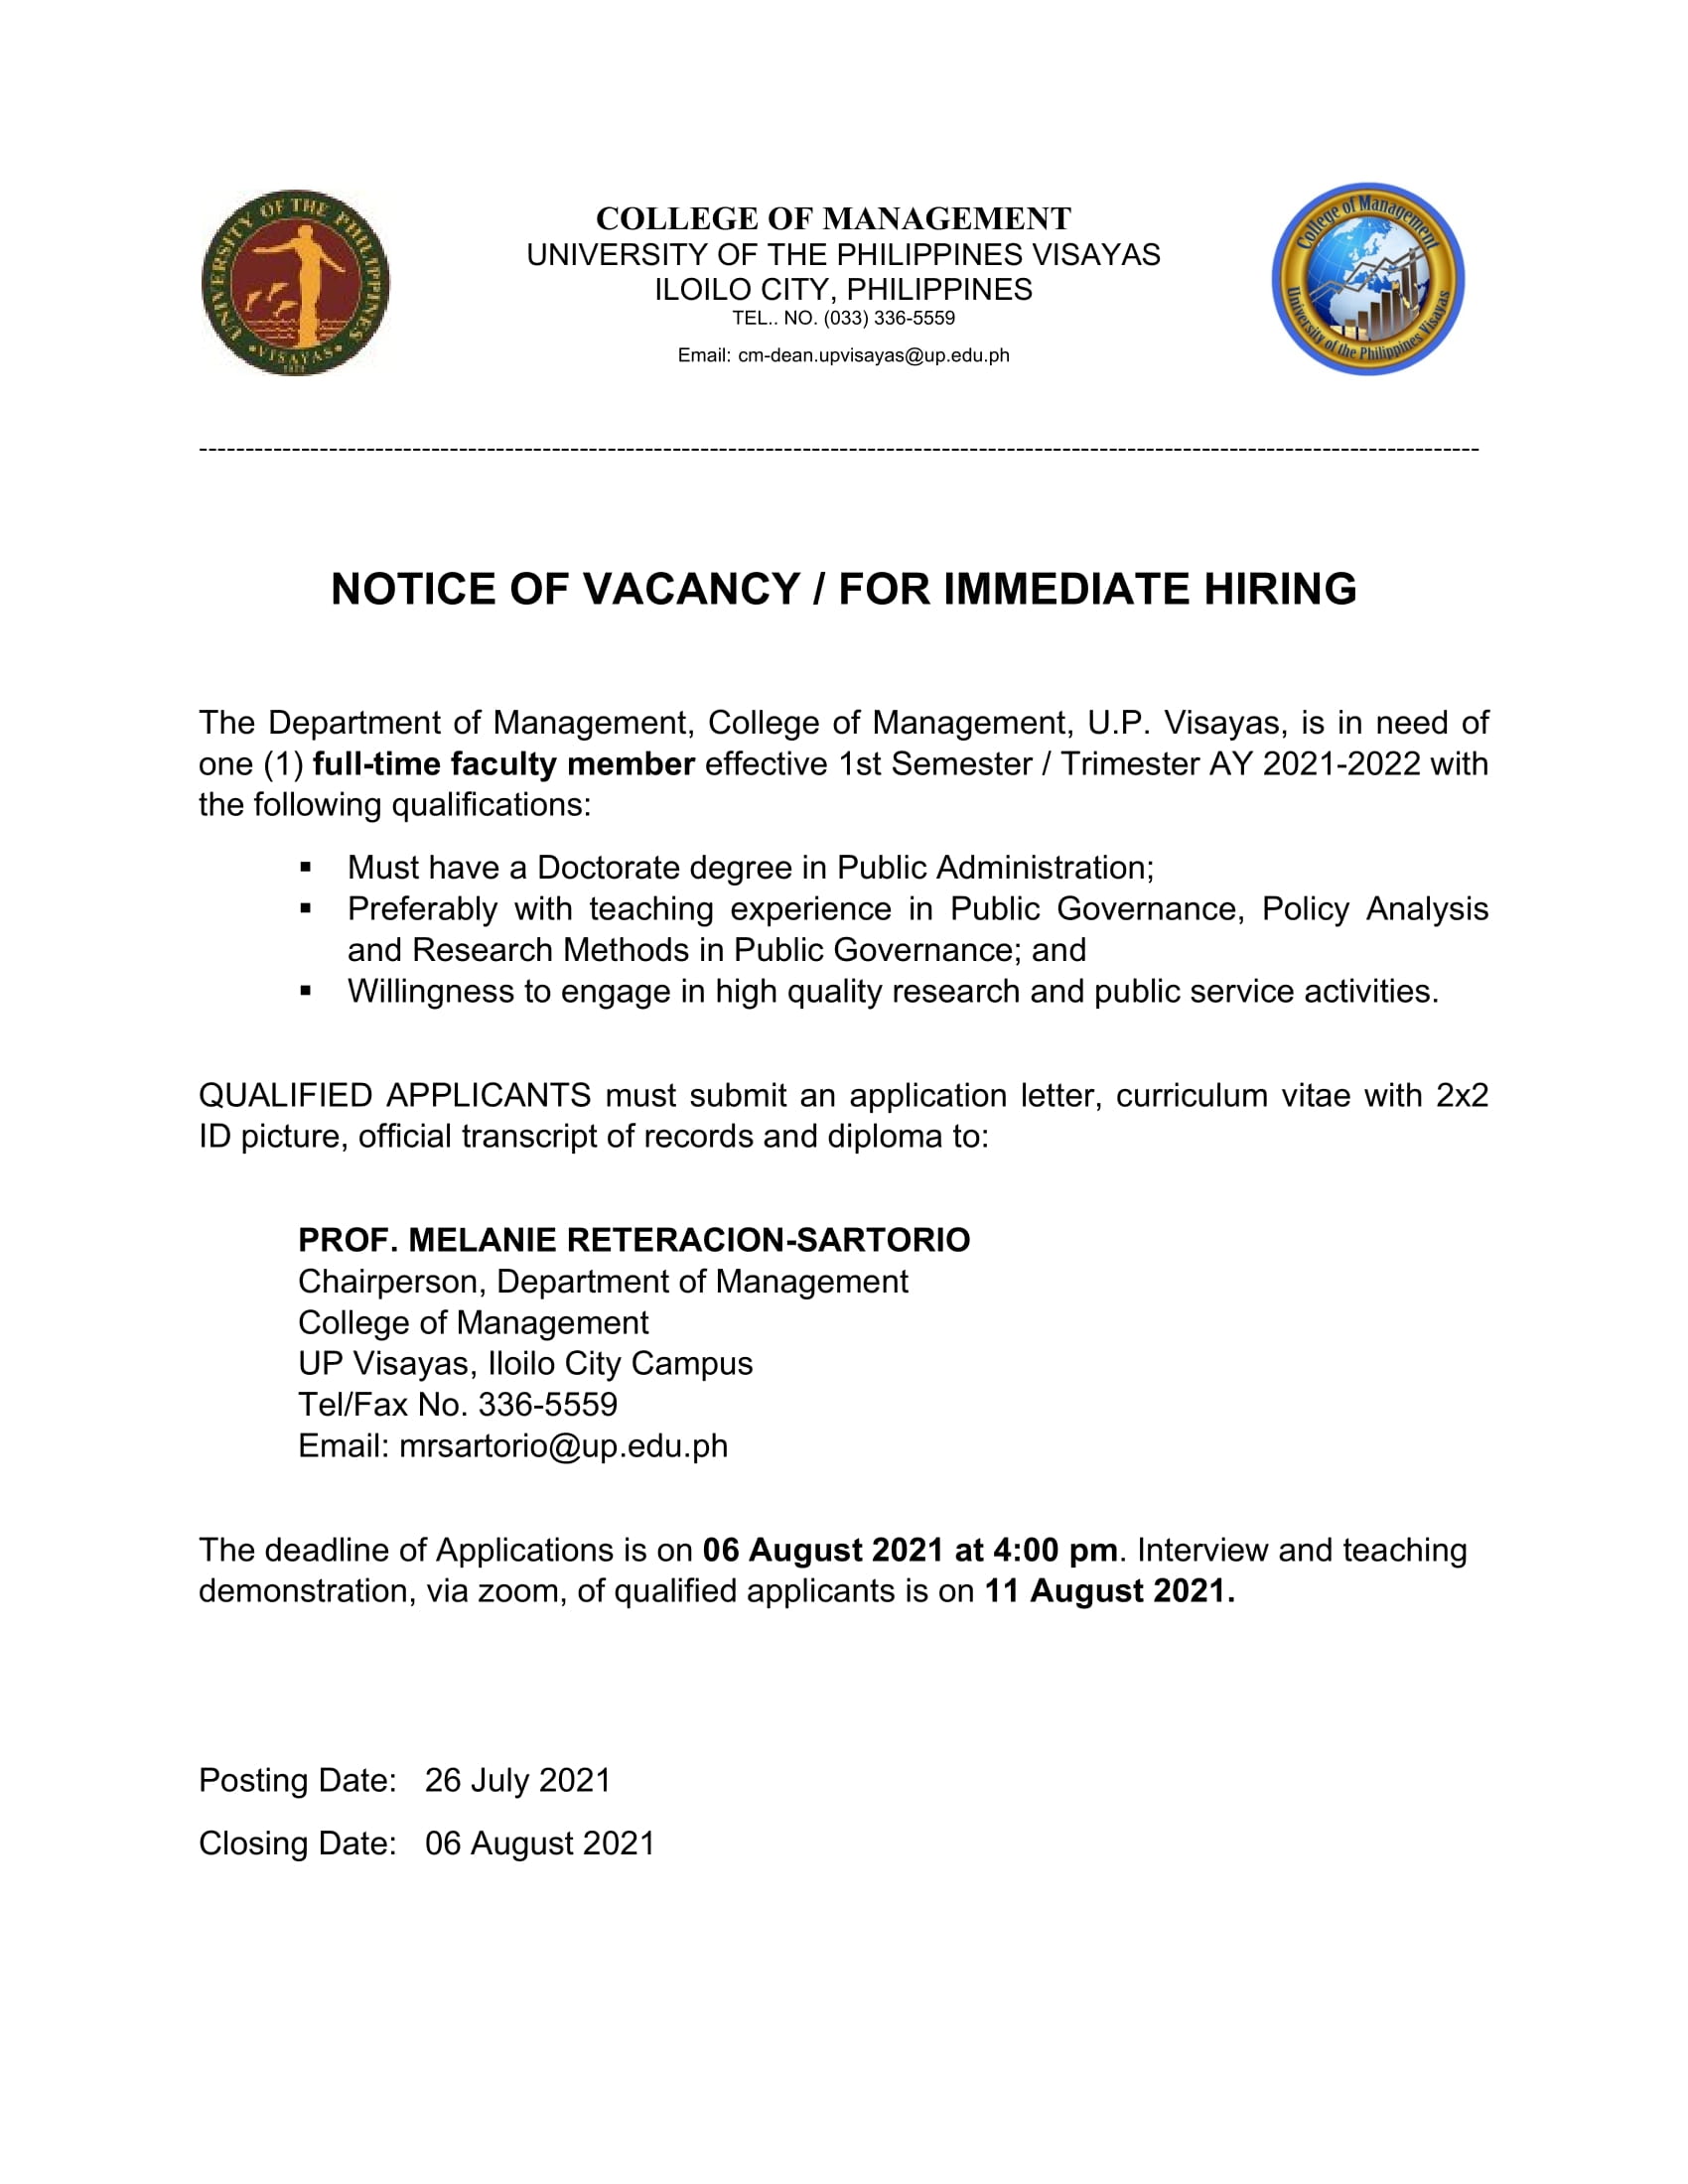 hiring cm faculty public admin 0721